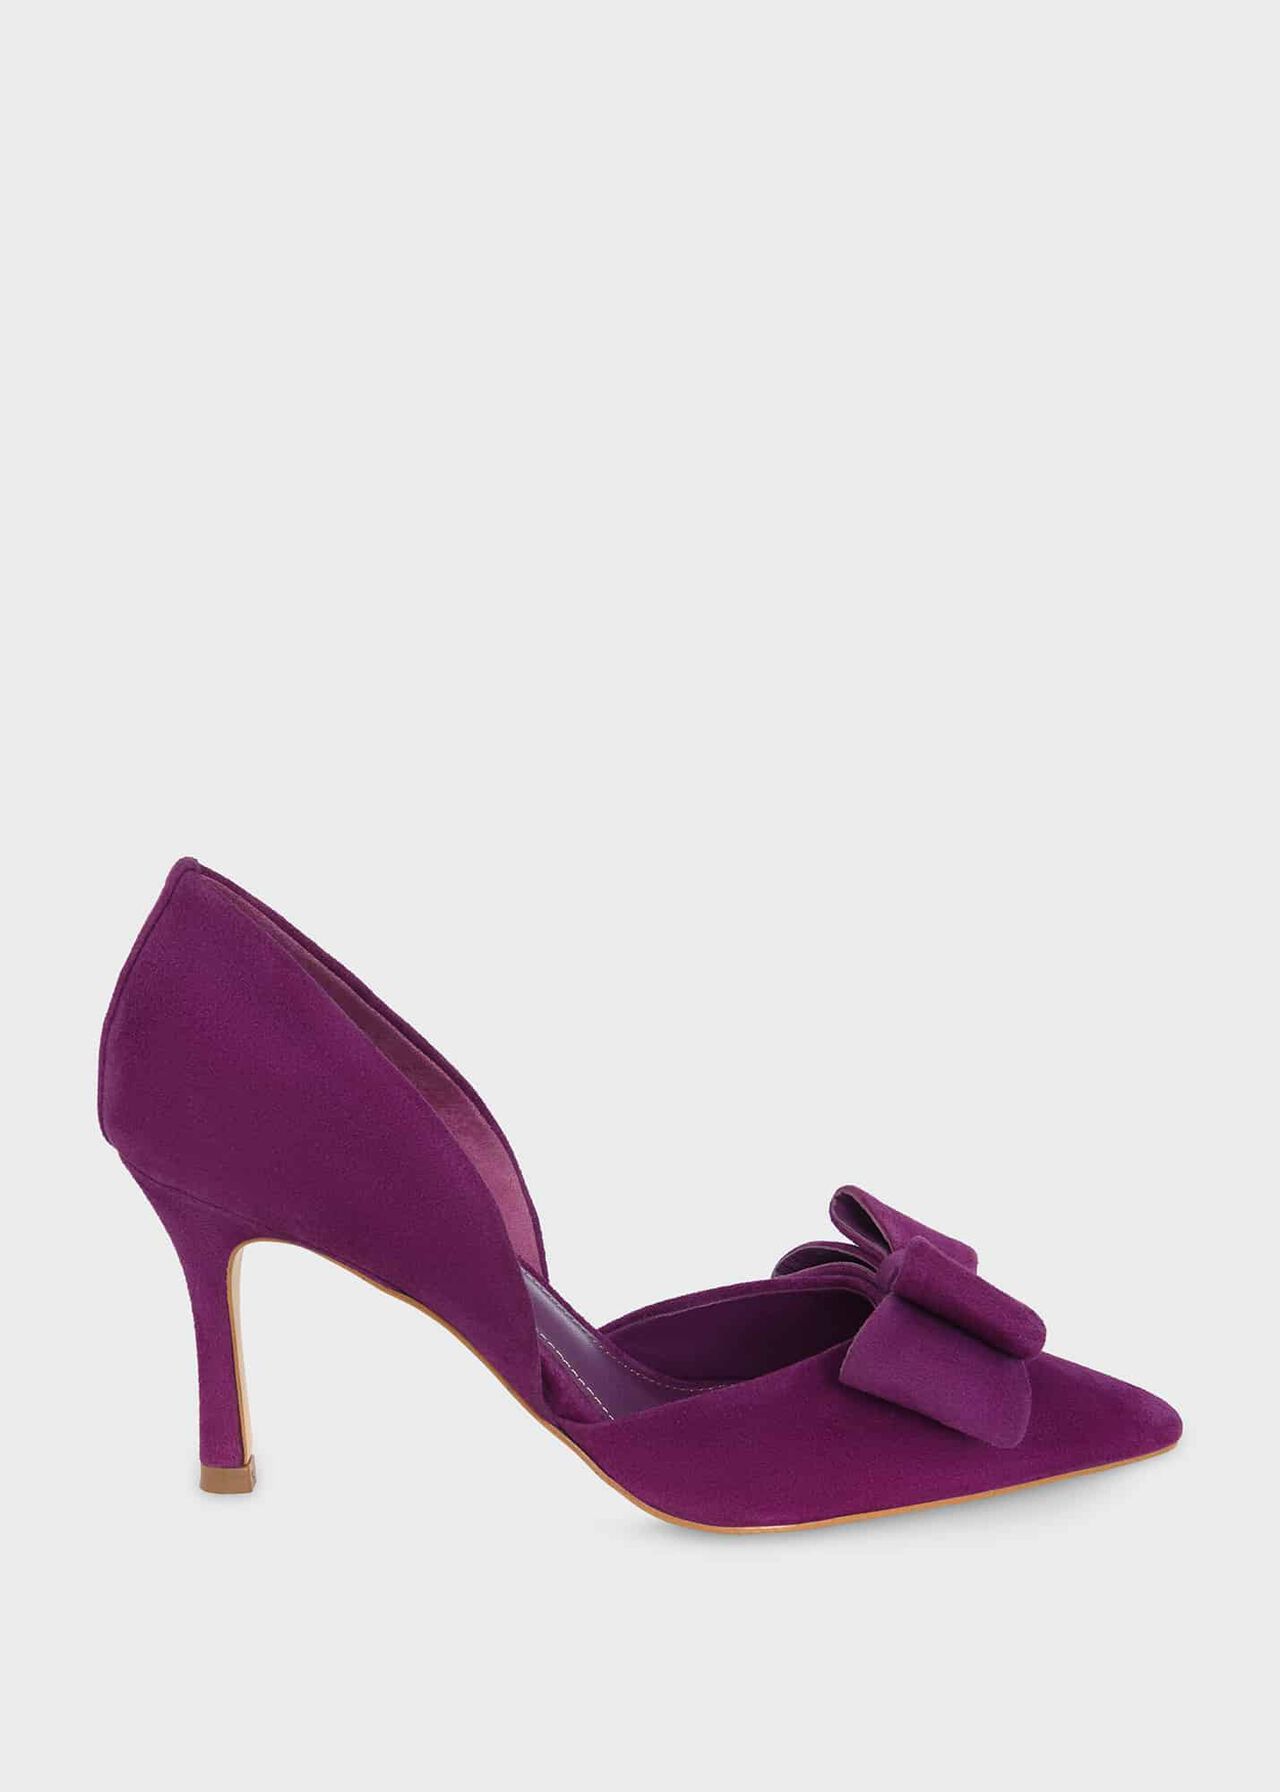 Elva Suede Bow Court Shoes, Magenta Purple, hi-res